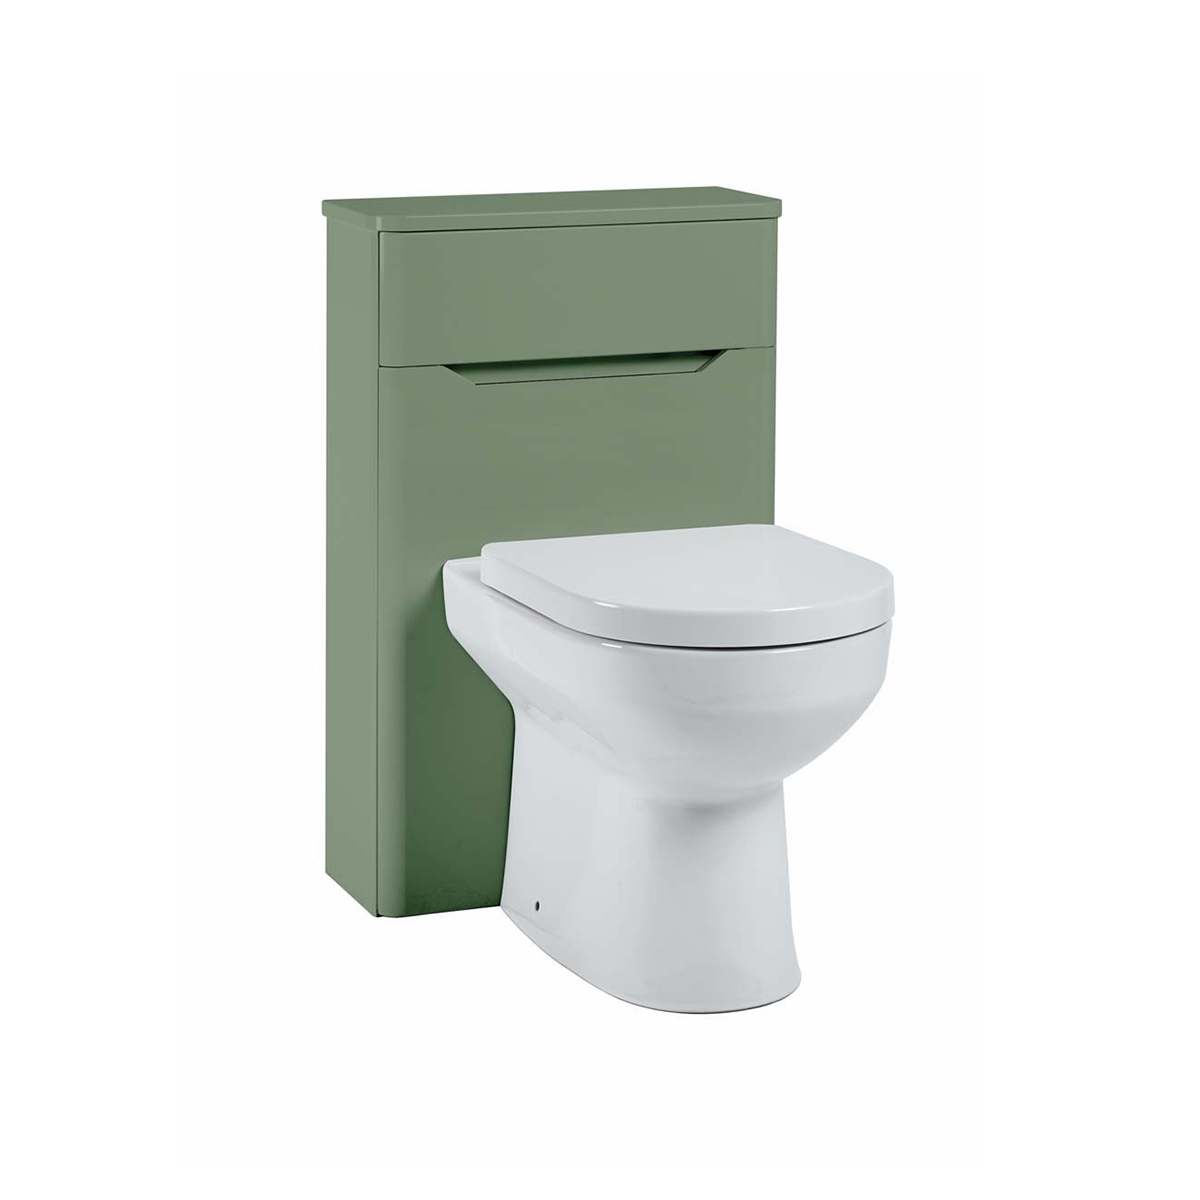 Brun 500 WC Unit - Green